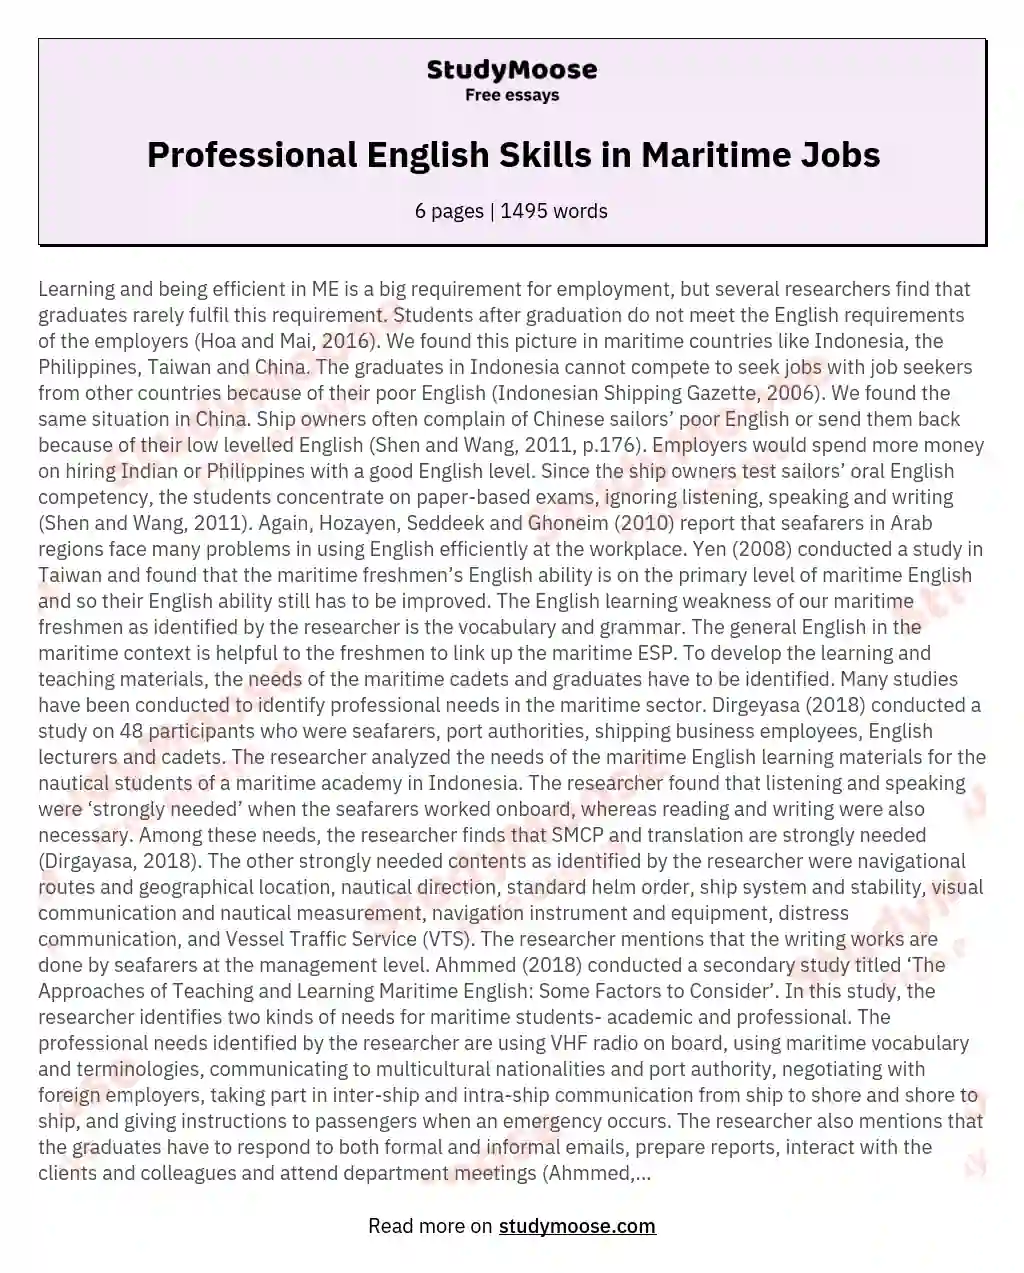 Professional English Skills in Maritime Jobs essay